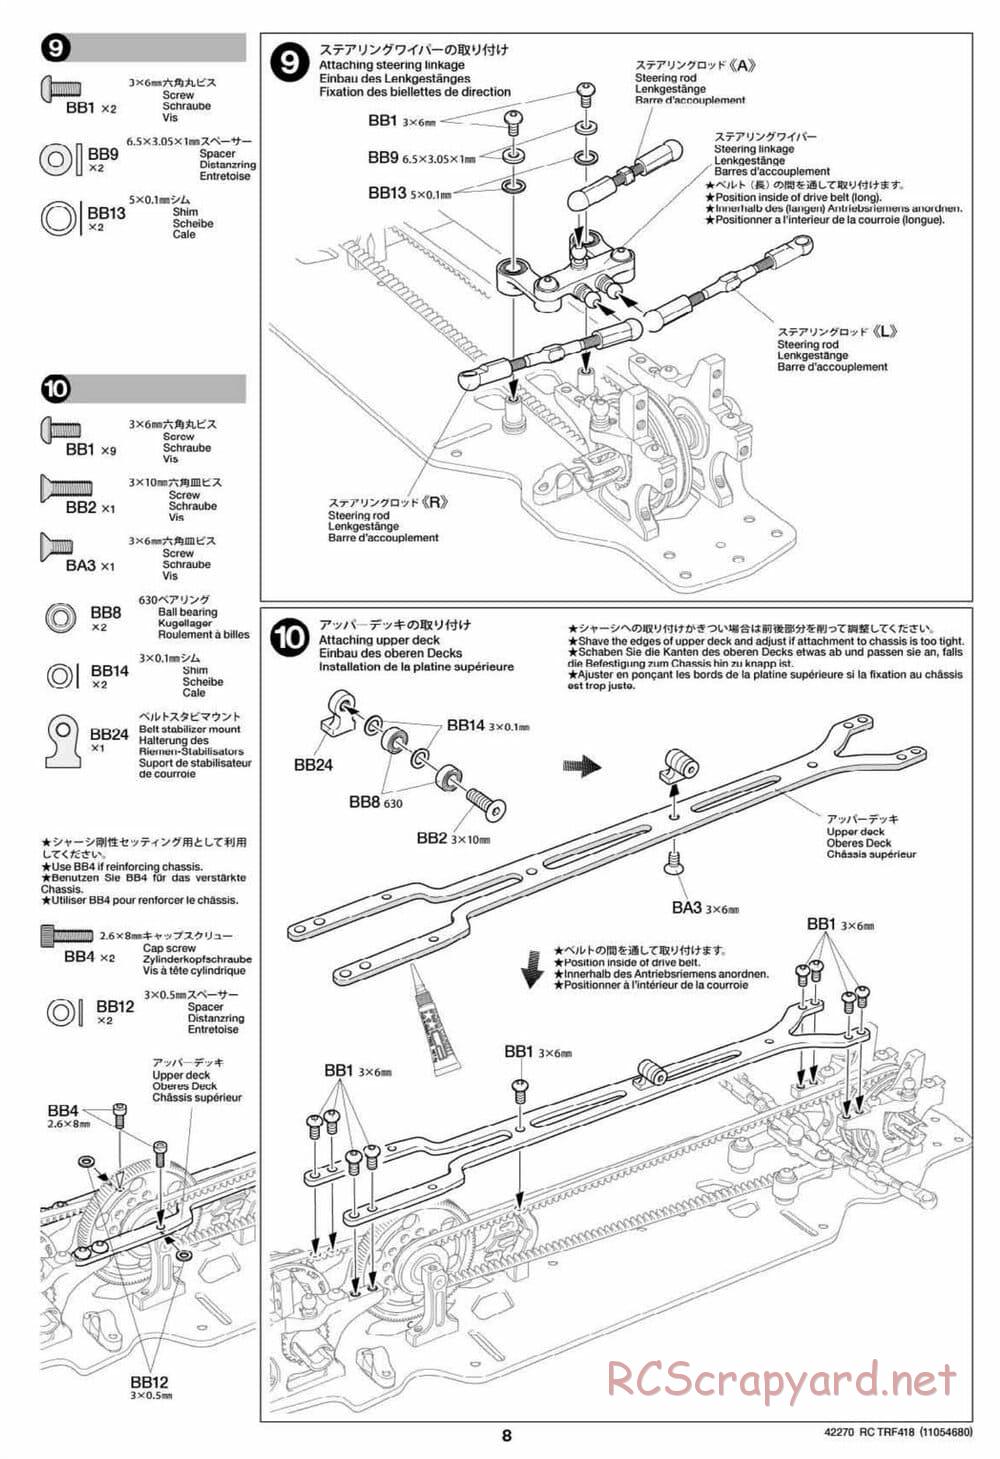 Tamiya - TRF418 Chassis - Manual - Page 8